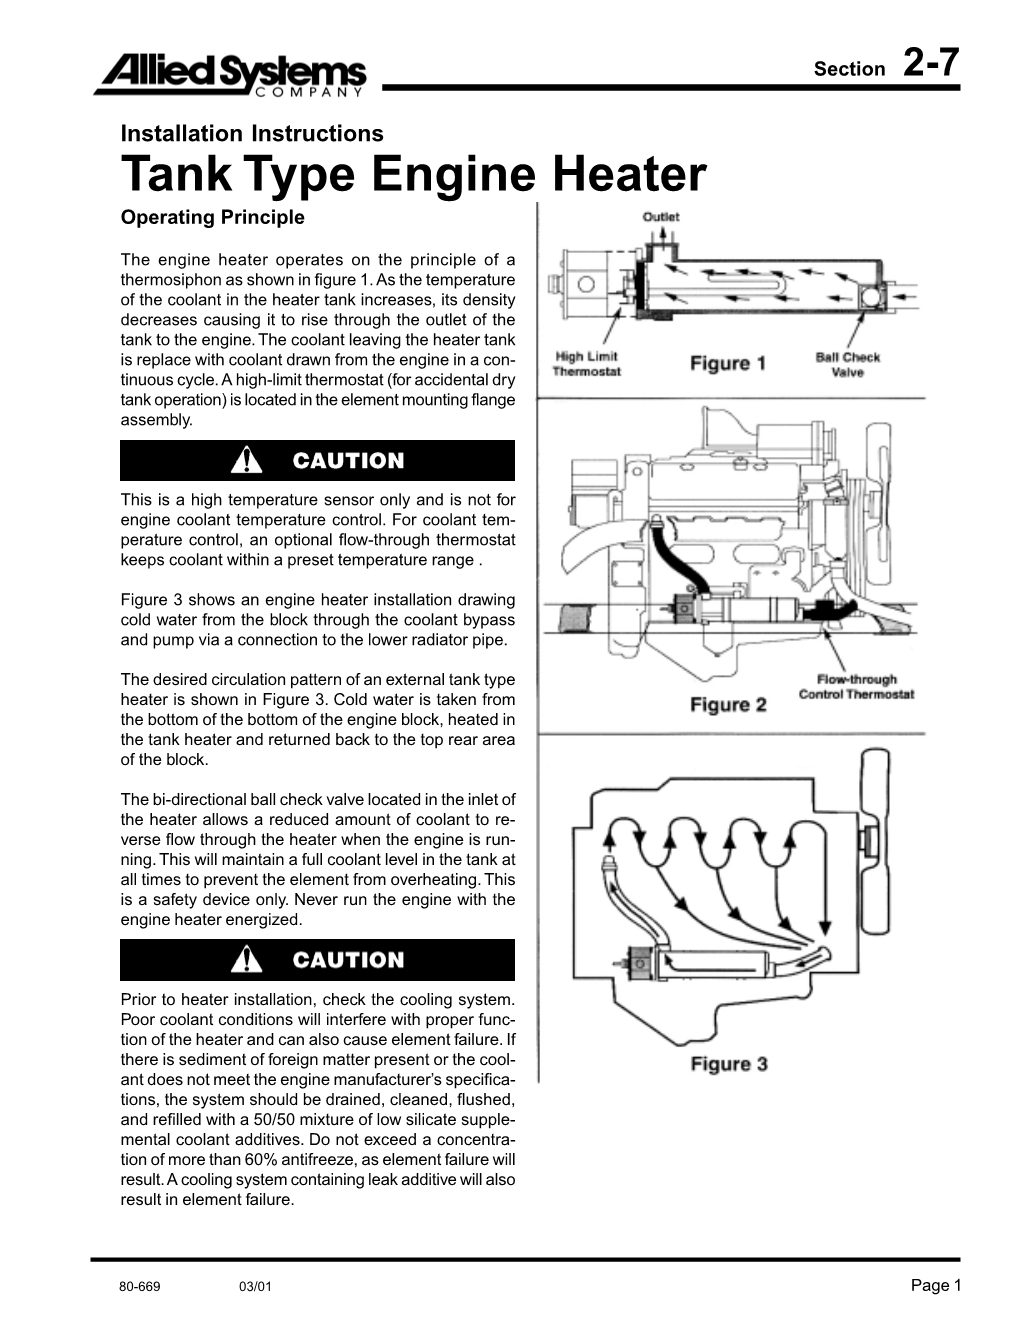 Tank Type Engine Heater Operating Principle